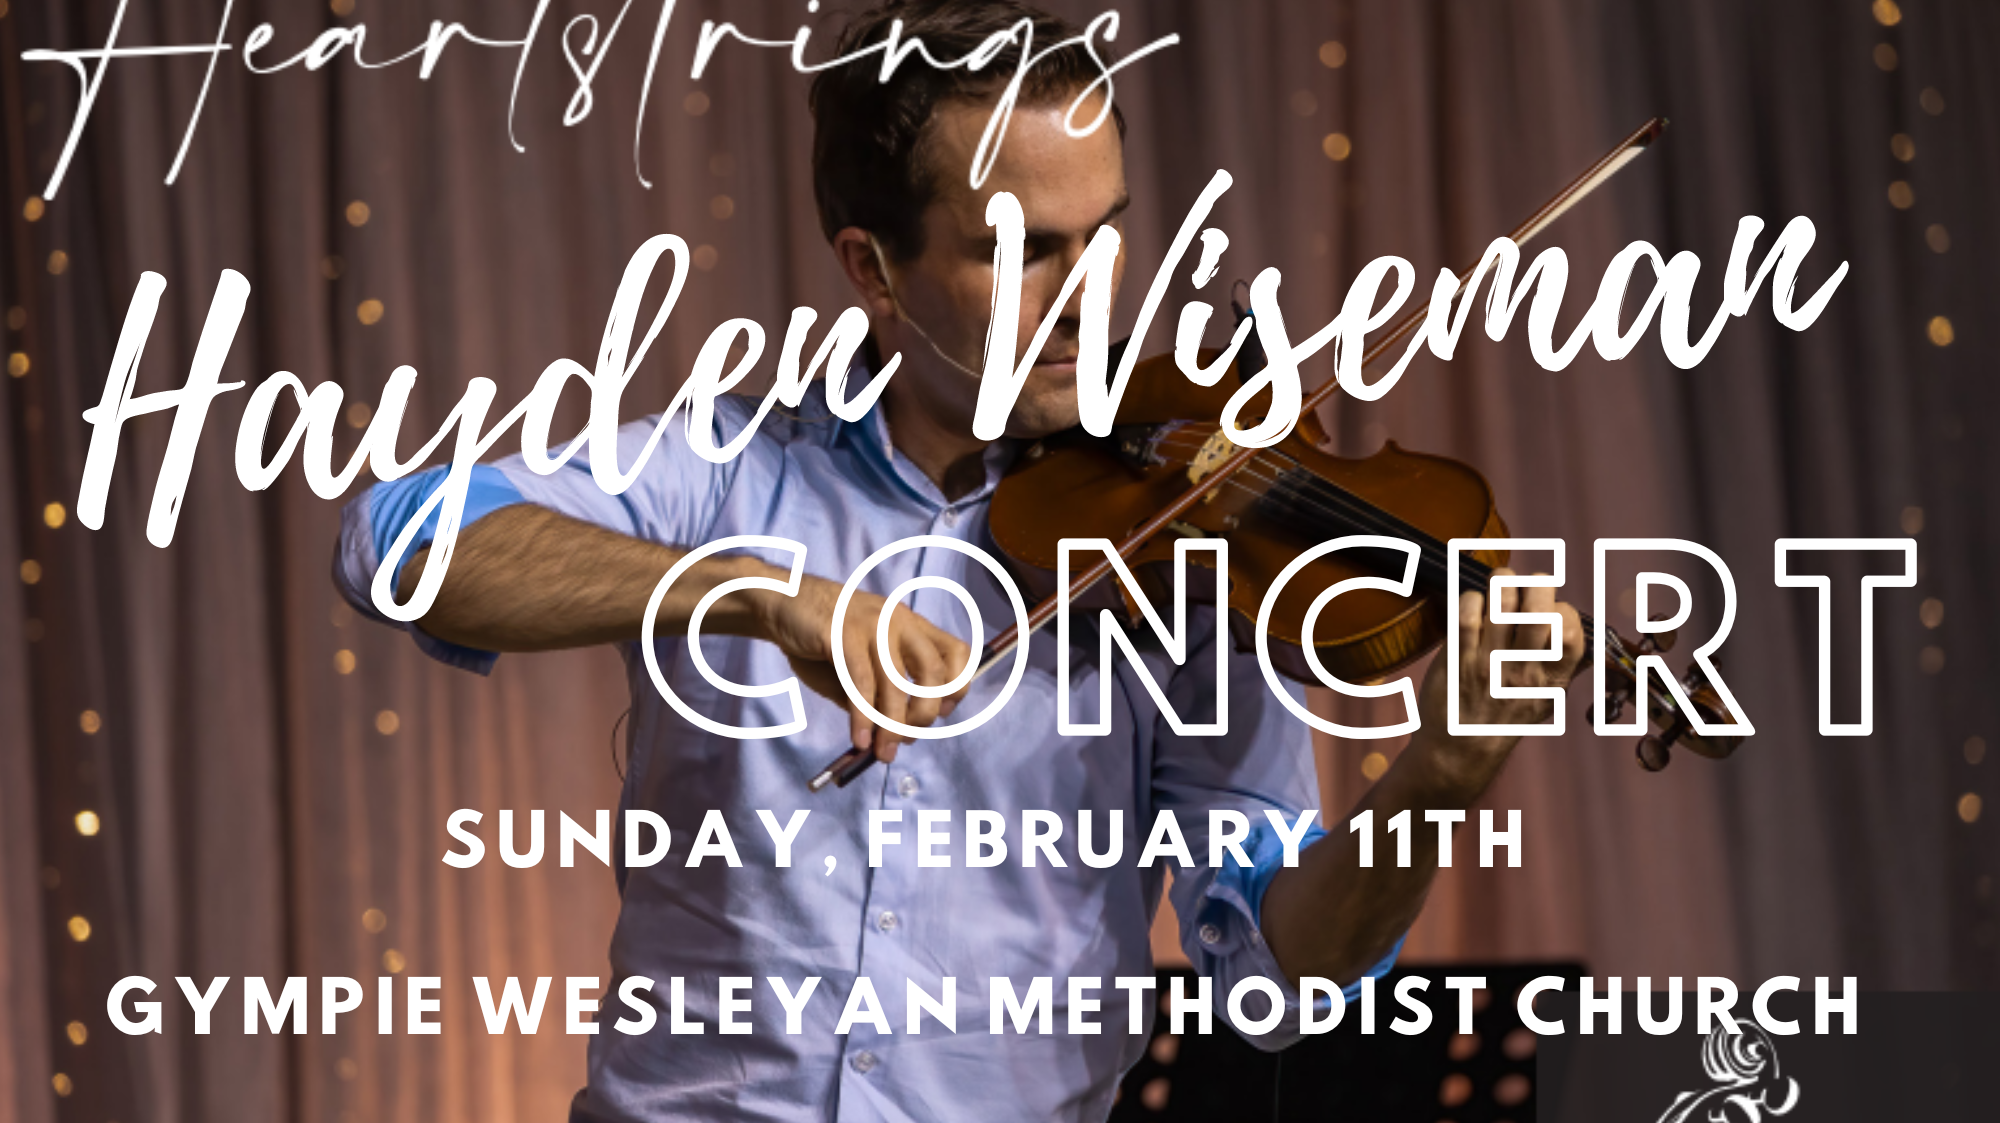 Hayden Wiseman Concert @ Gympie Wesleyan Methodist Church